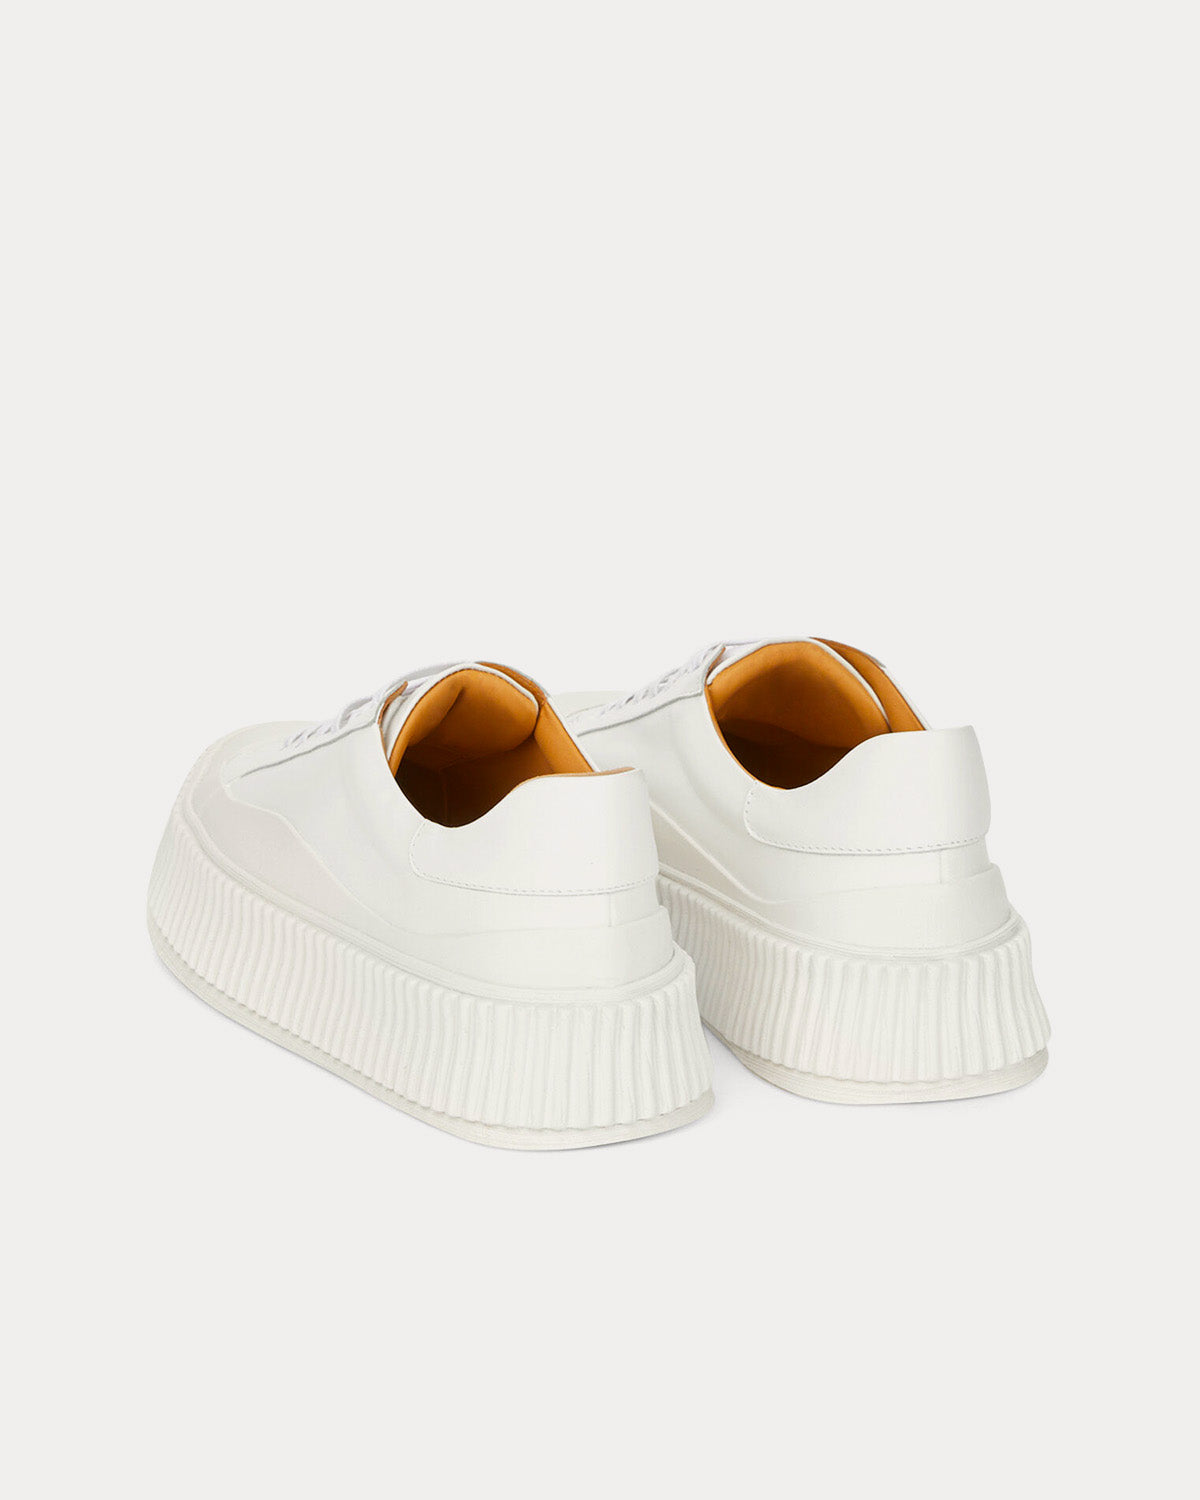 Jil Sander - Platform Leather White Low Top Sneakers